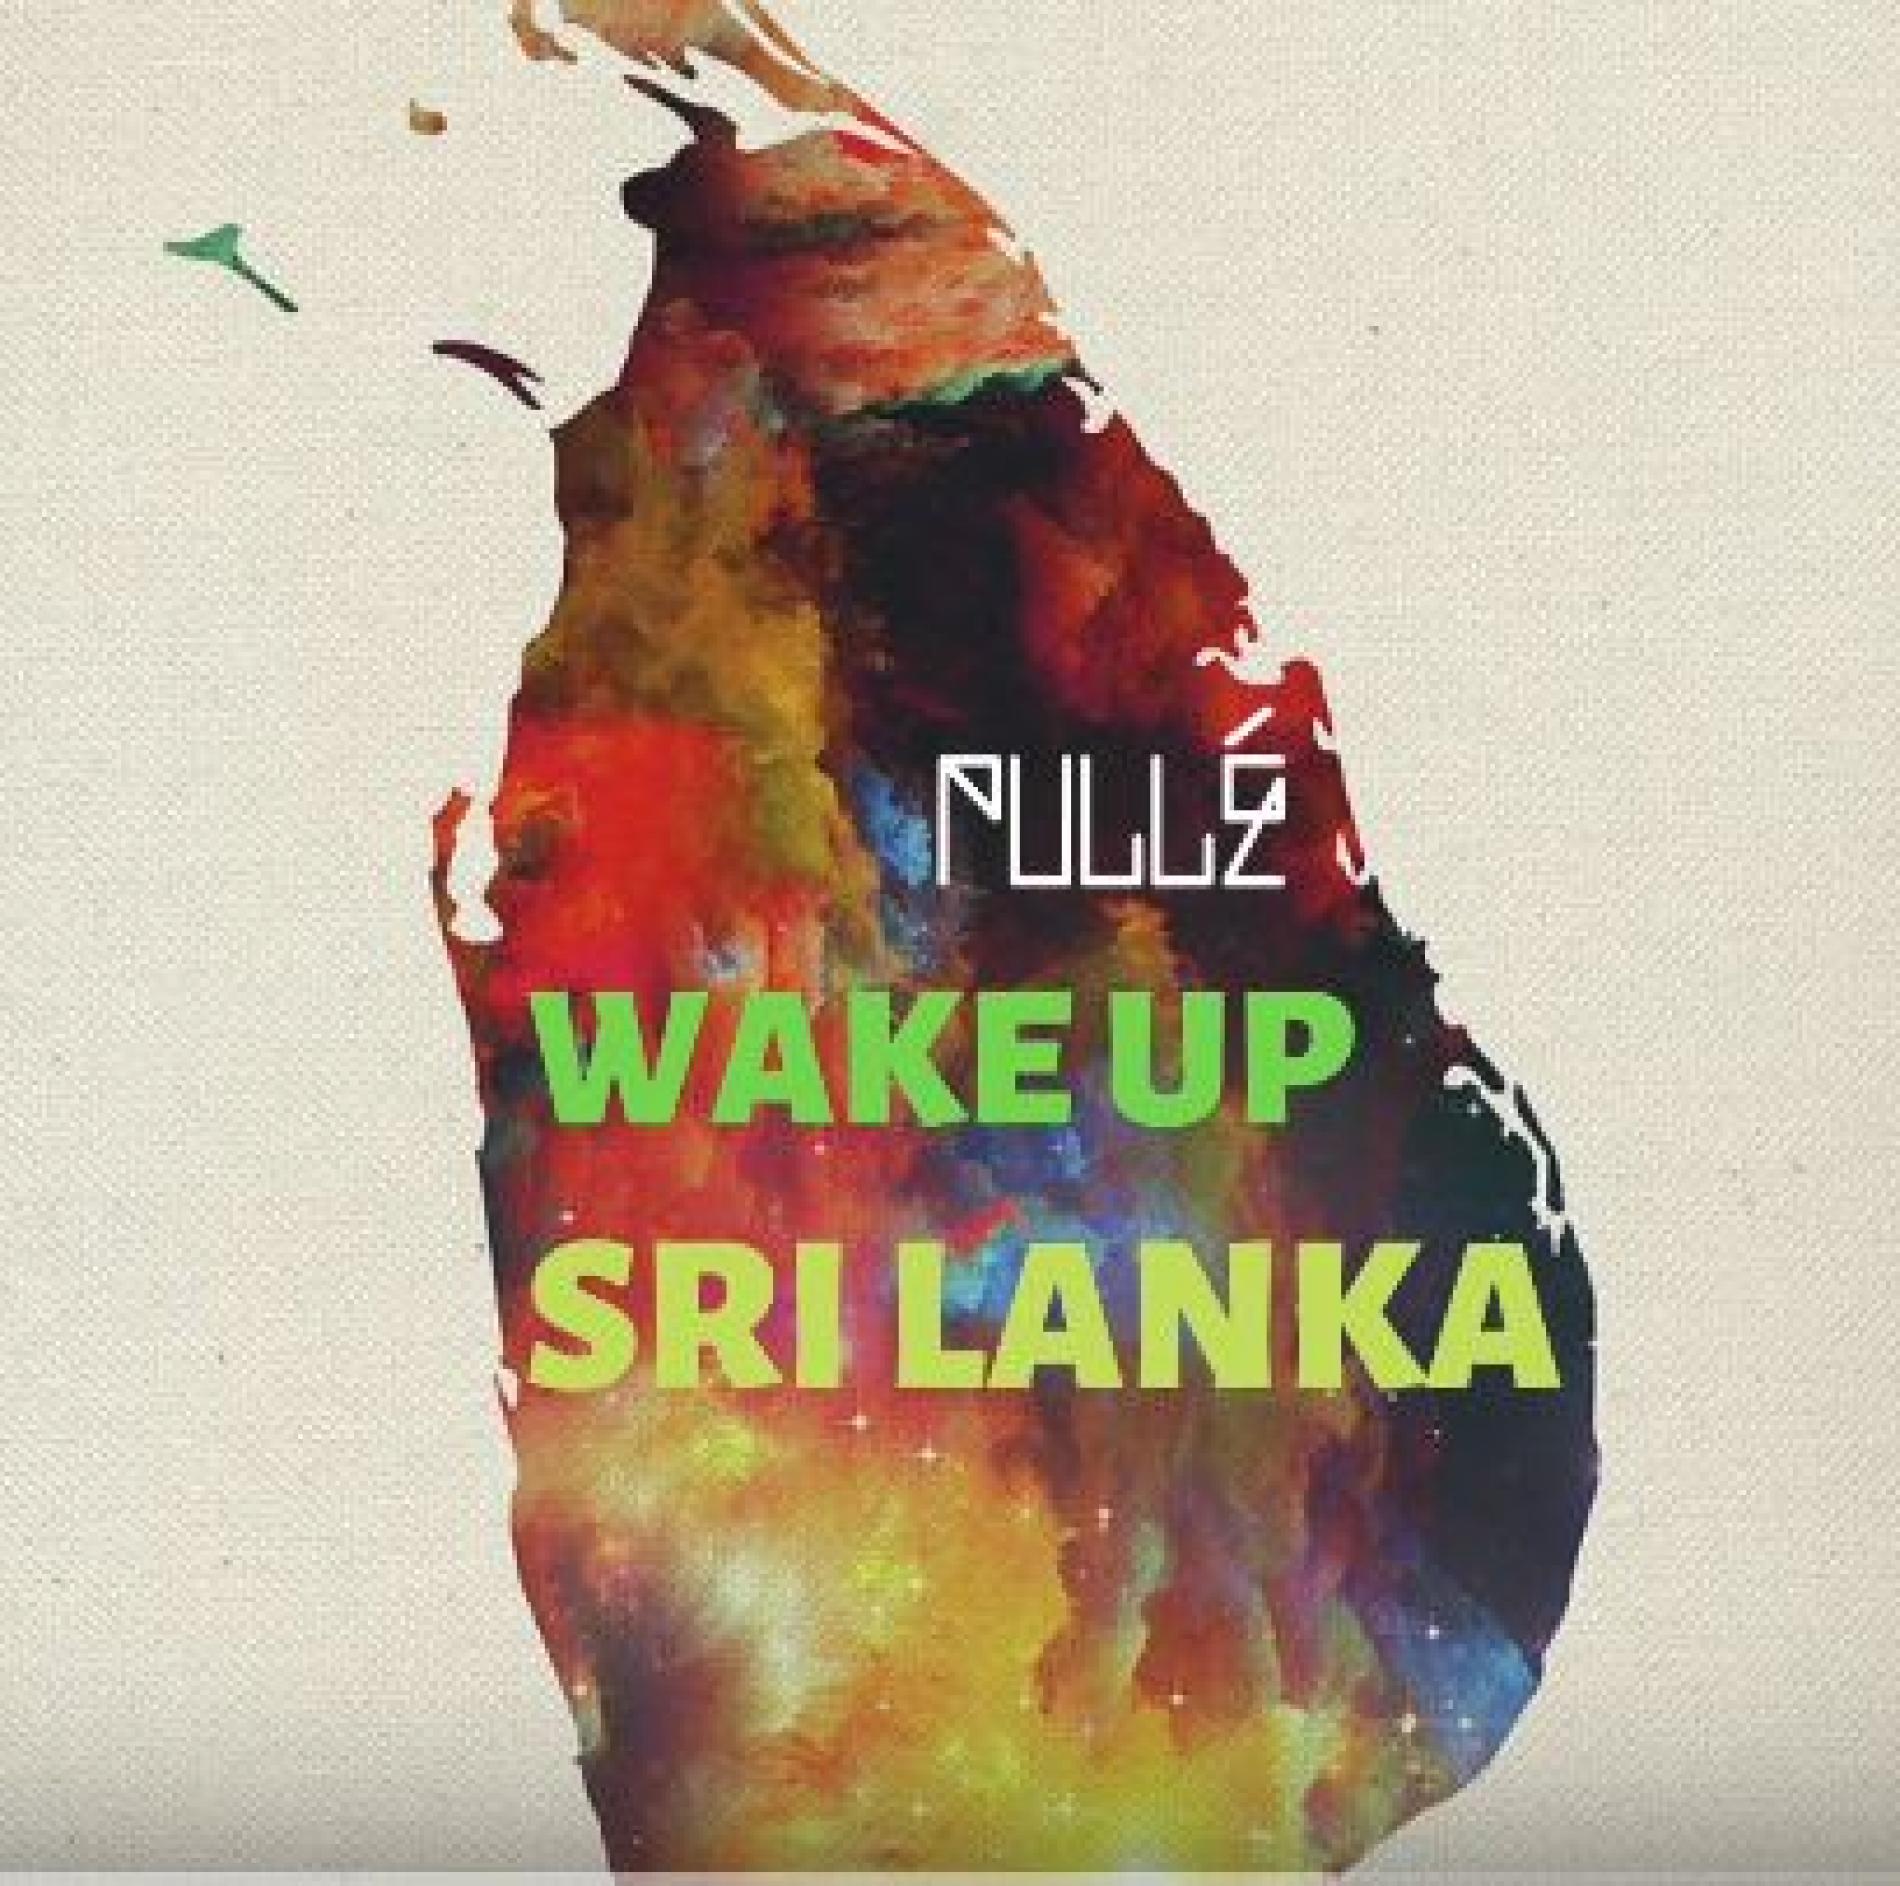 PULLÉ- Wake up Sri Lanka (feat. Charlie Chaplin)